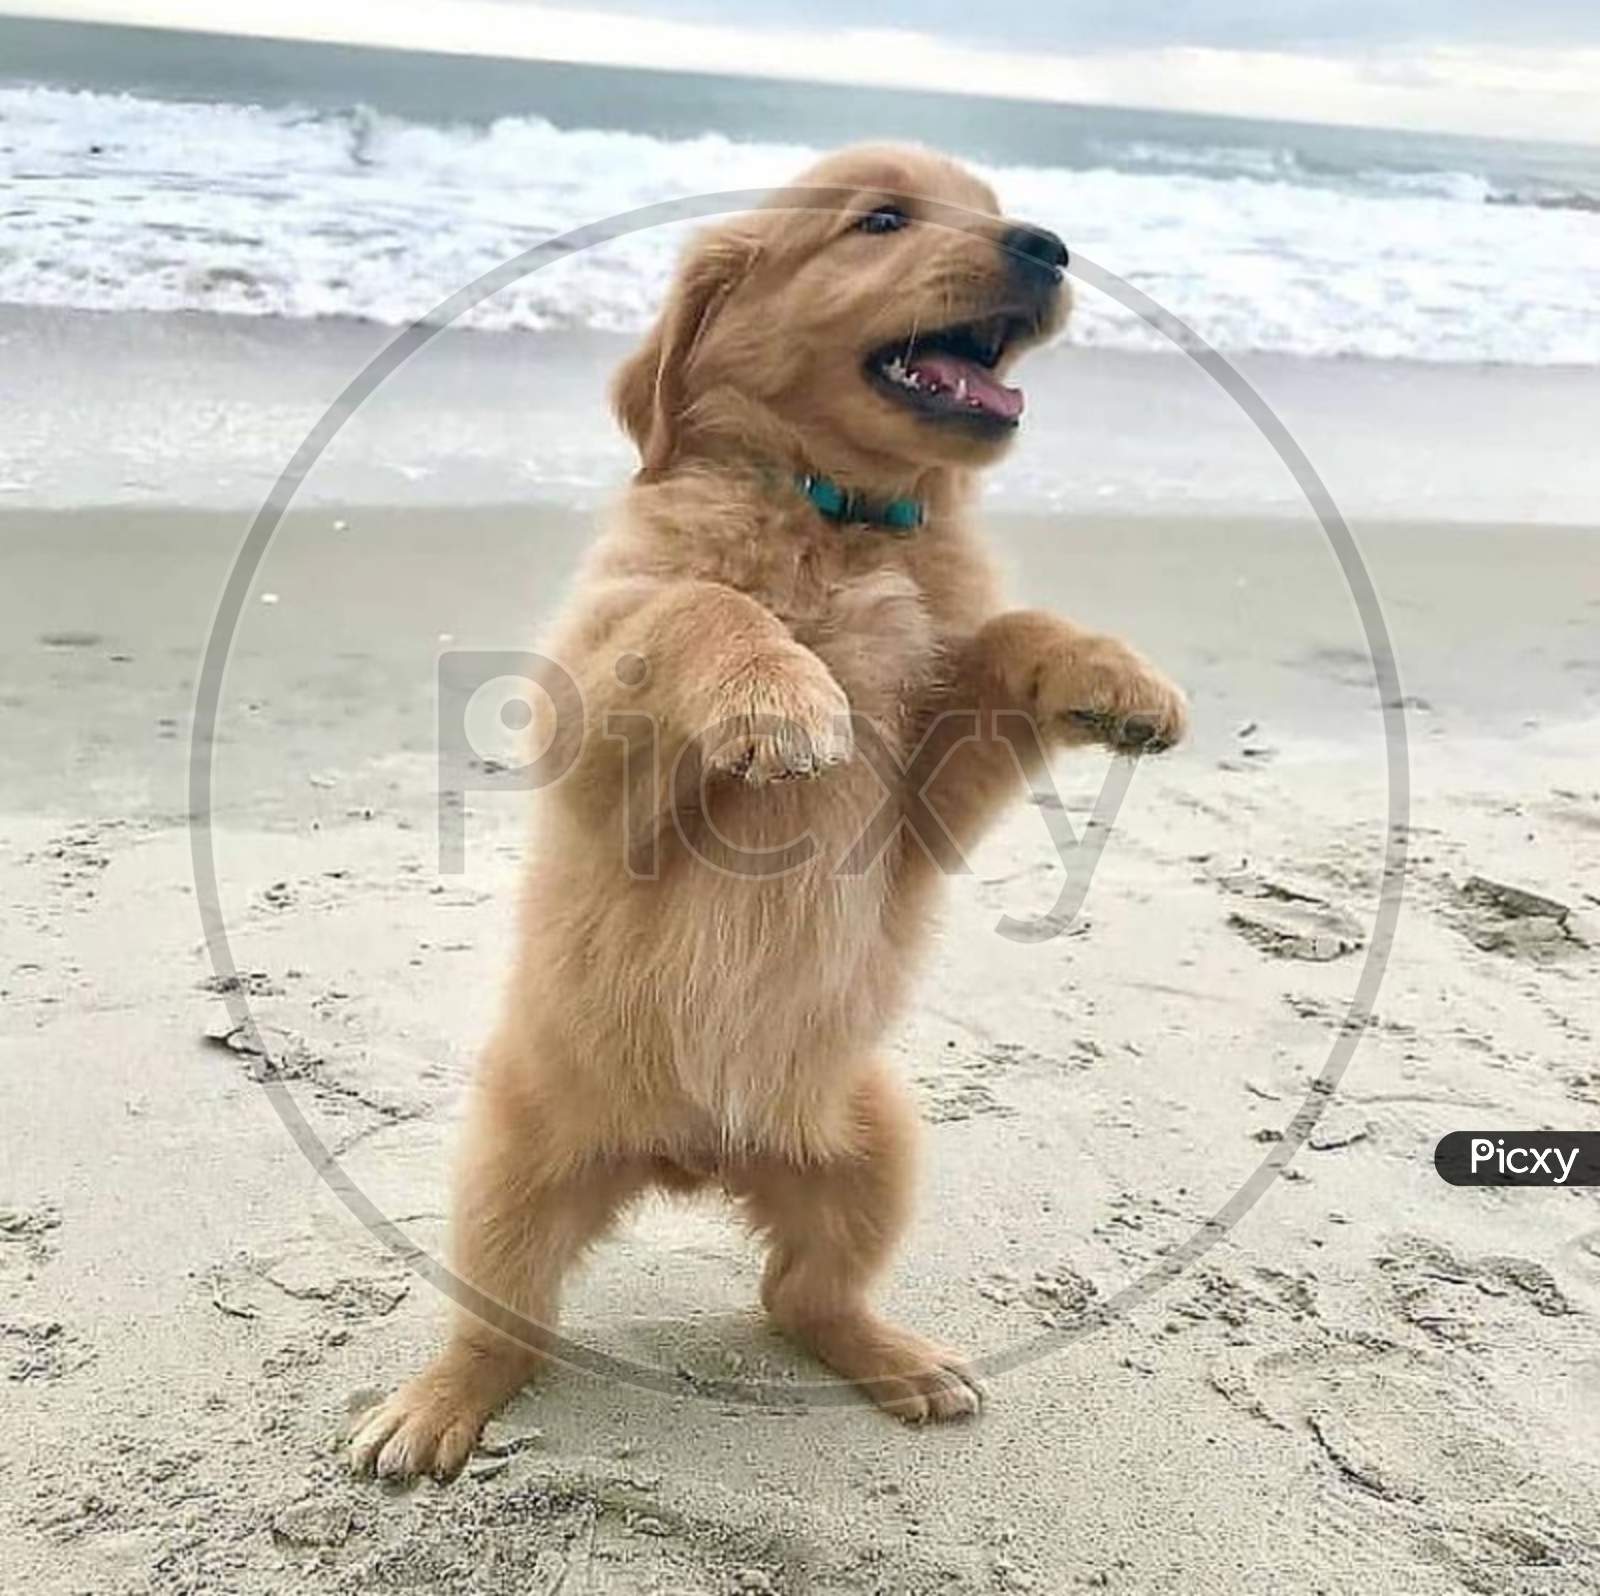 A standing dog in a beach